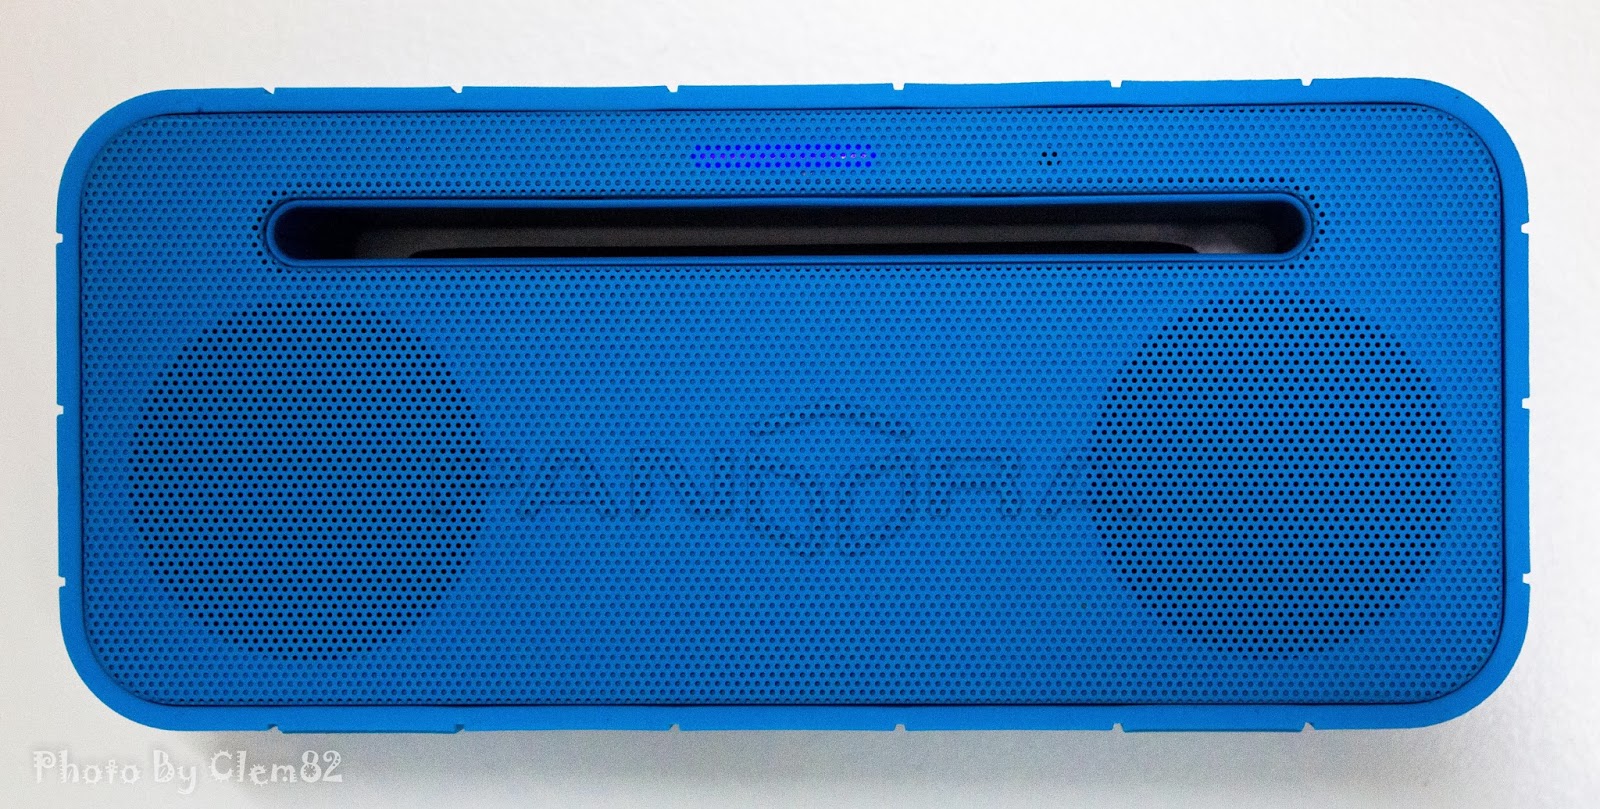 Opening Pandora's Box: SonicGear Pandora Wireless Bluetooth Media Player Series 77